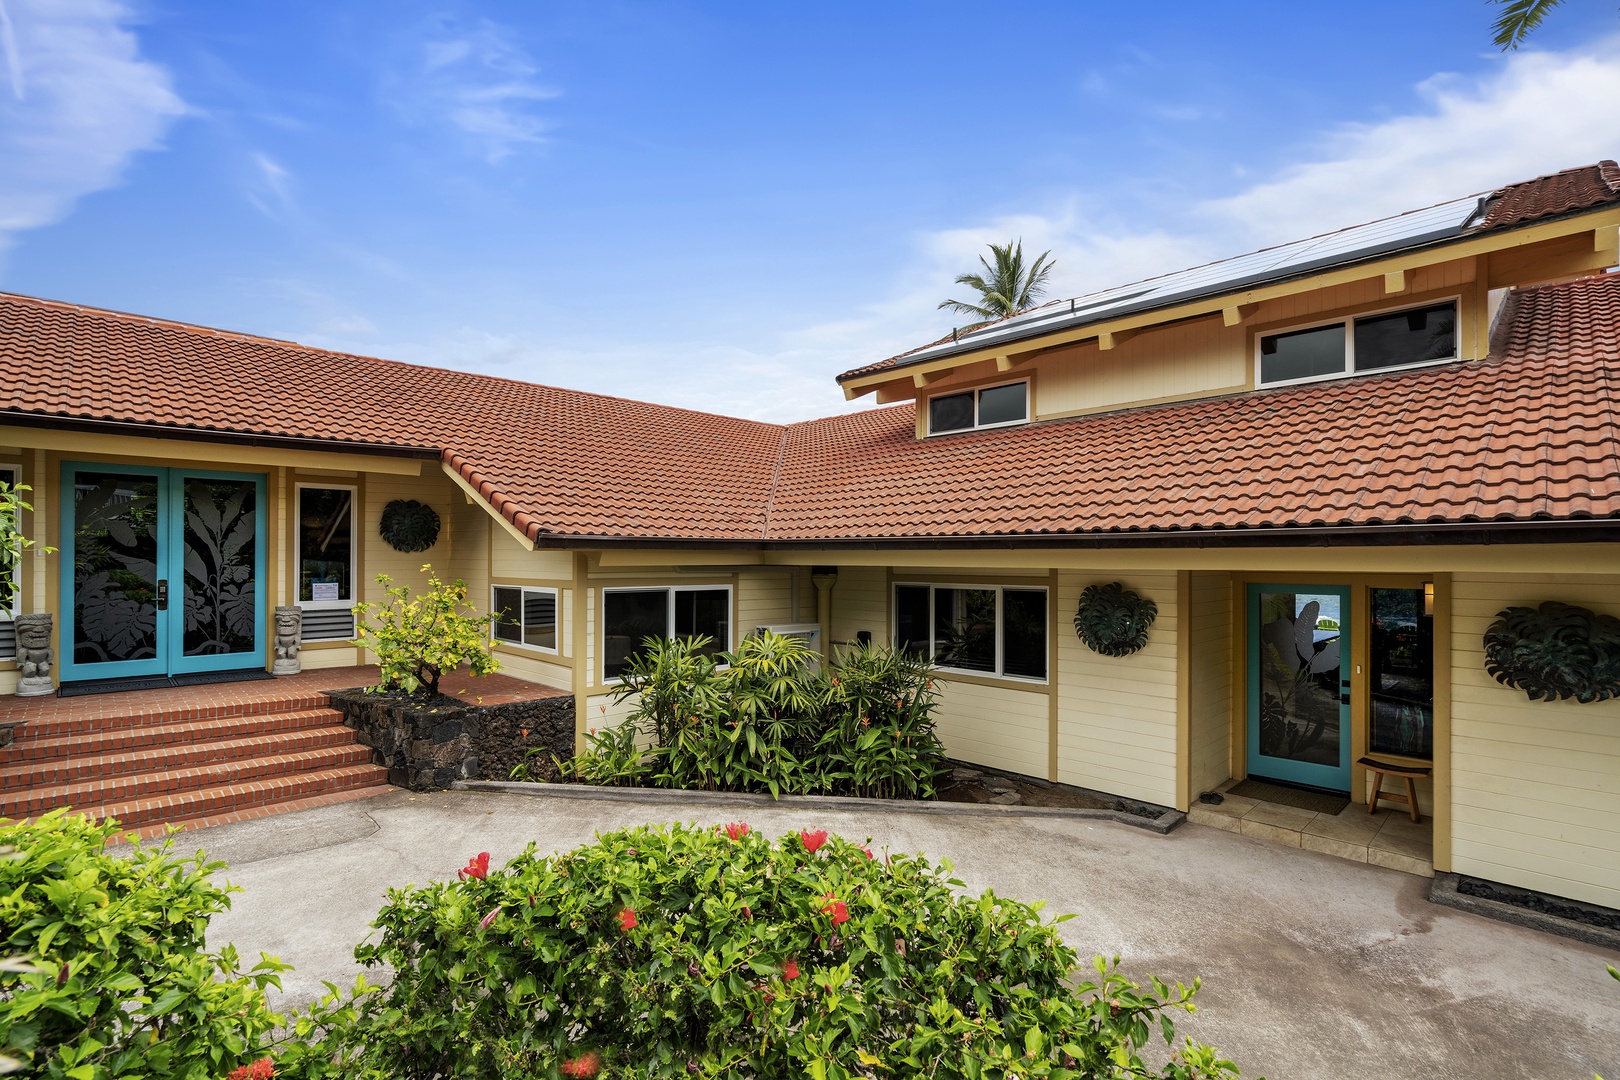 Kailua Kona Vacation Rentals, Hale Pua - View of both entries